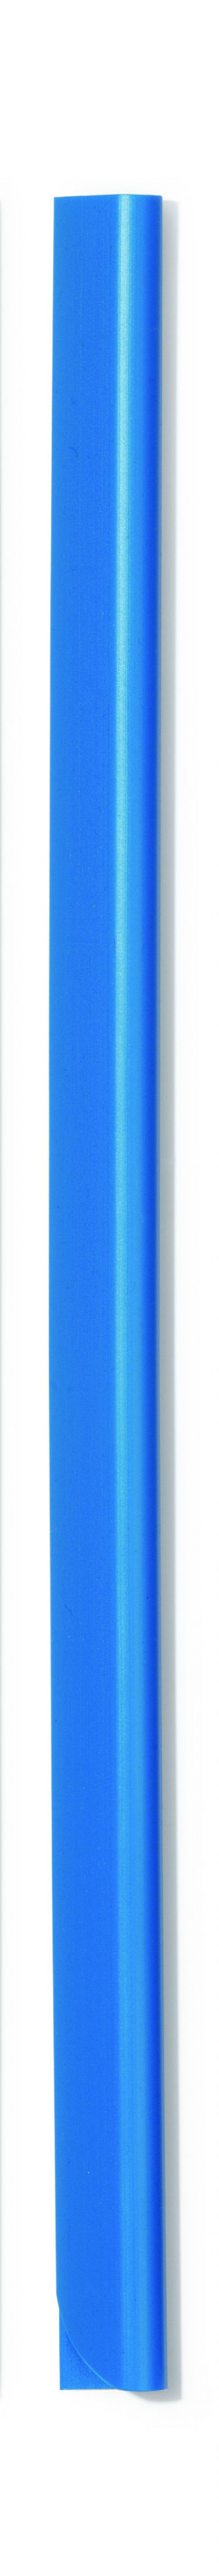 Durable Spine Bar A4 6mm Blue PK100